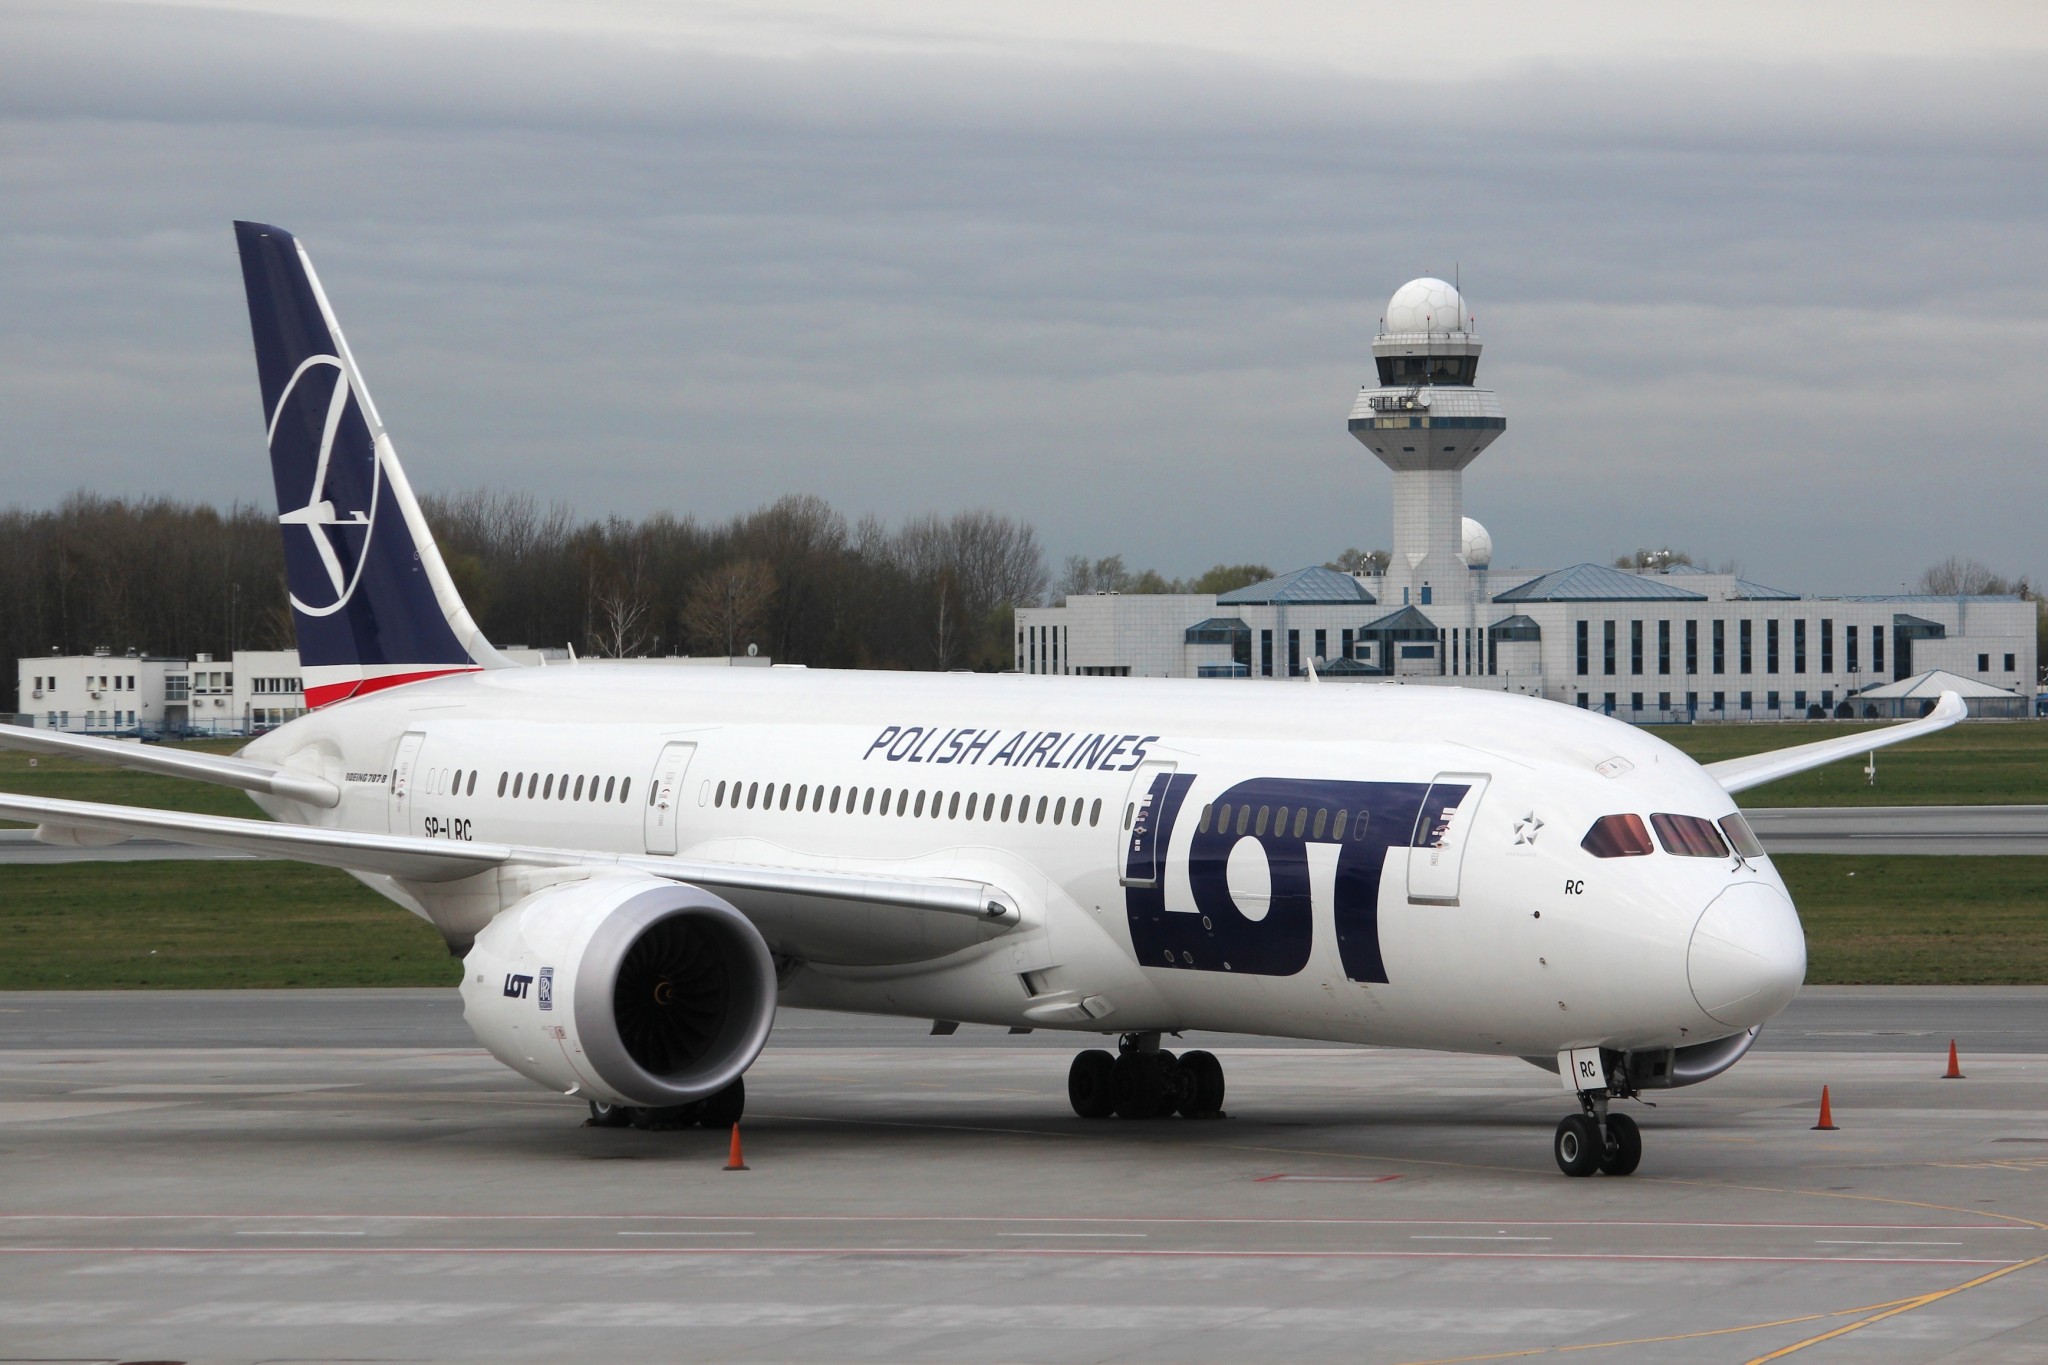 LOT Polish Airlines Signs Smart Parts Component Management Agreement